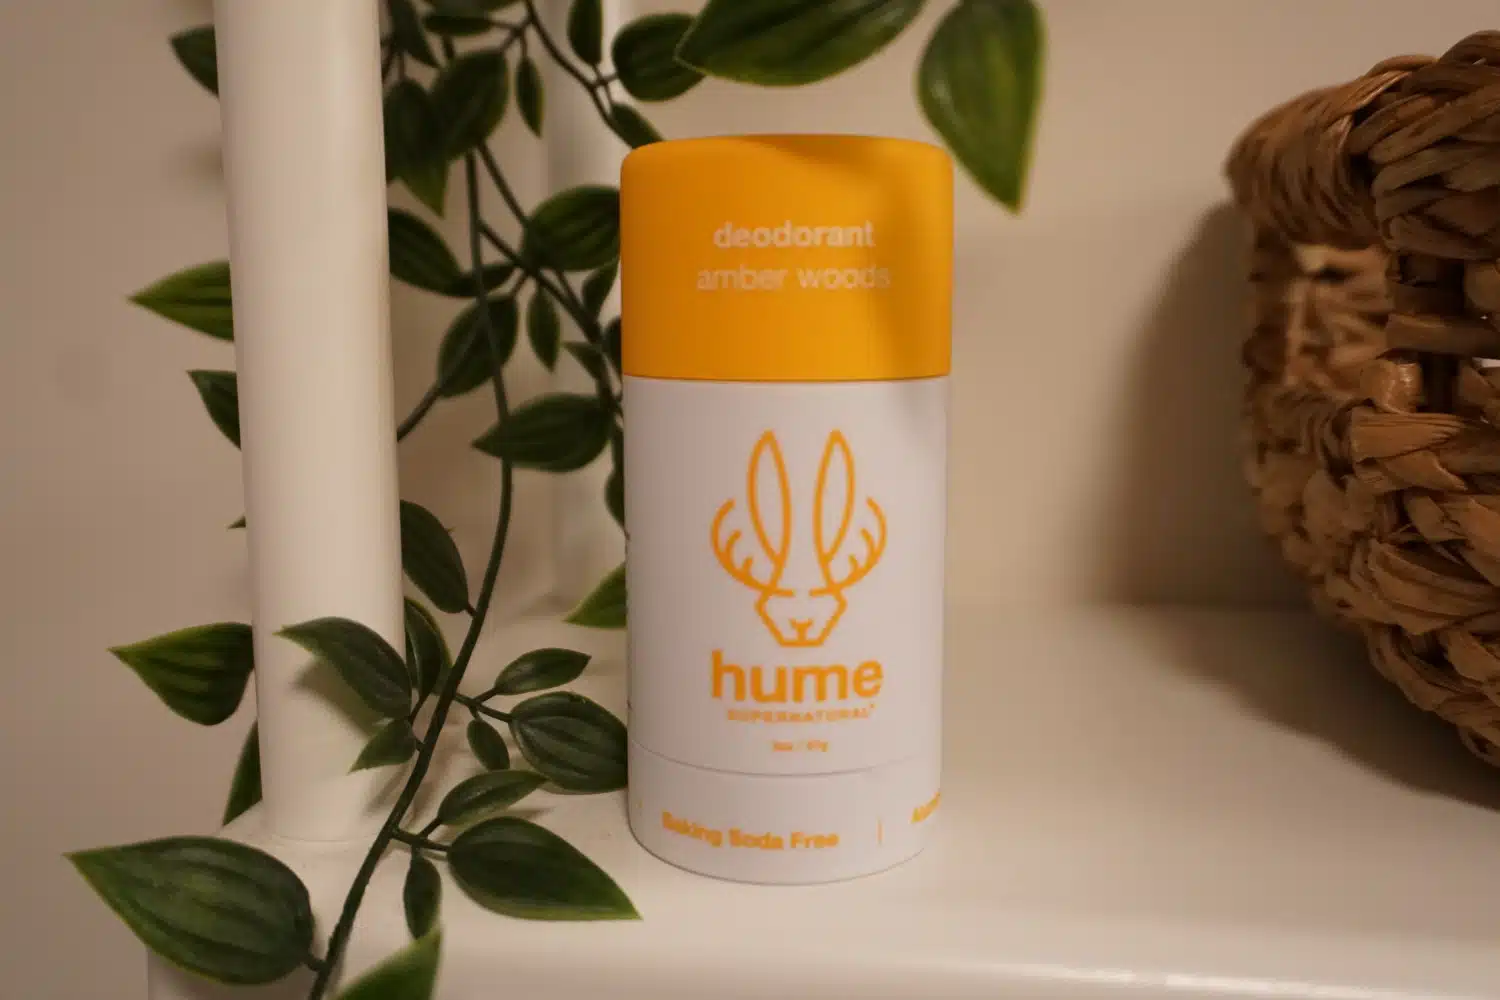 Hume Amber Woods Deodorant